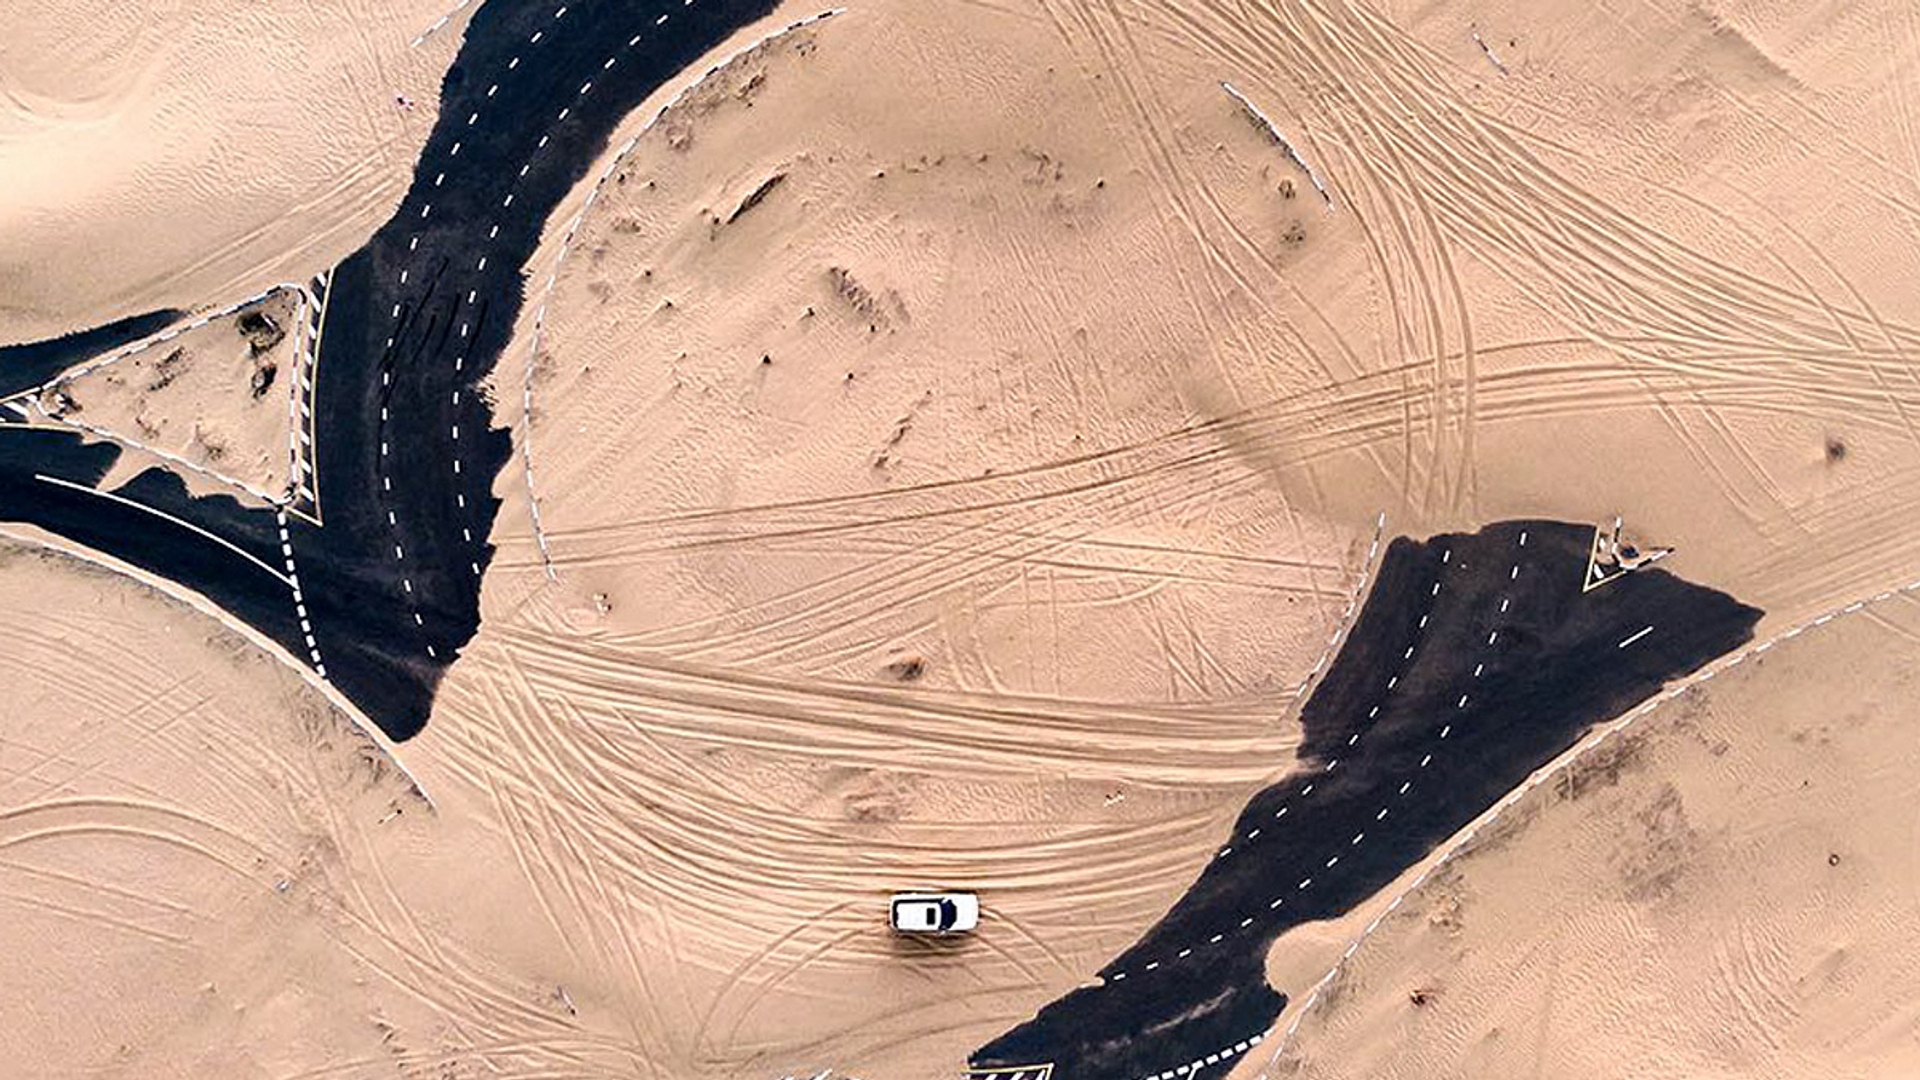 WDD zand woestijn dubai